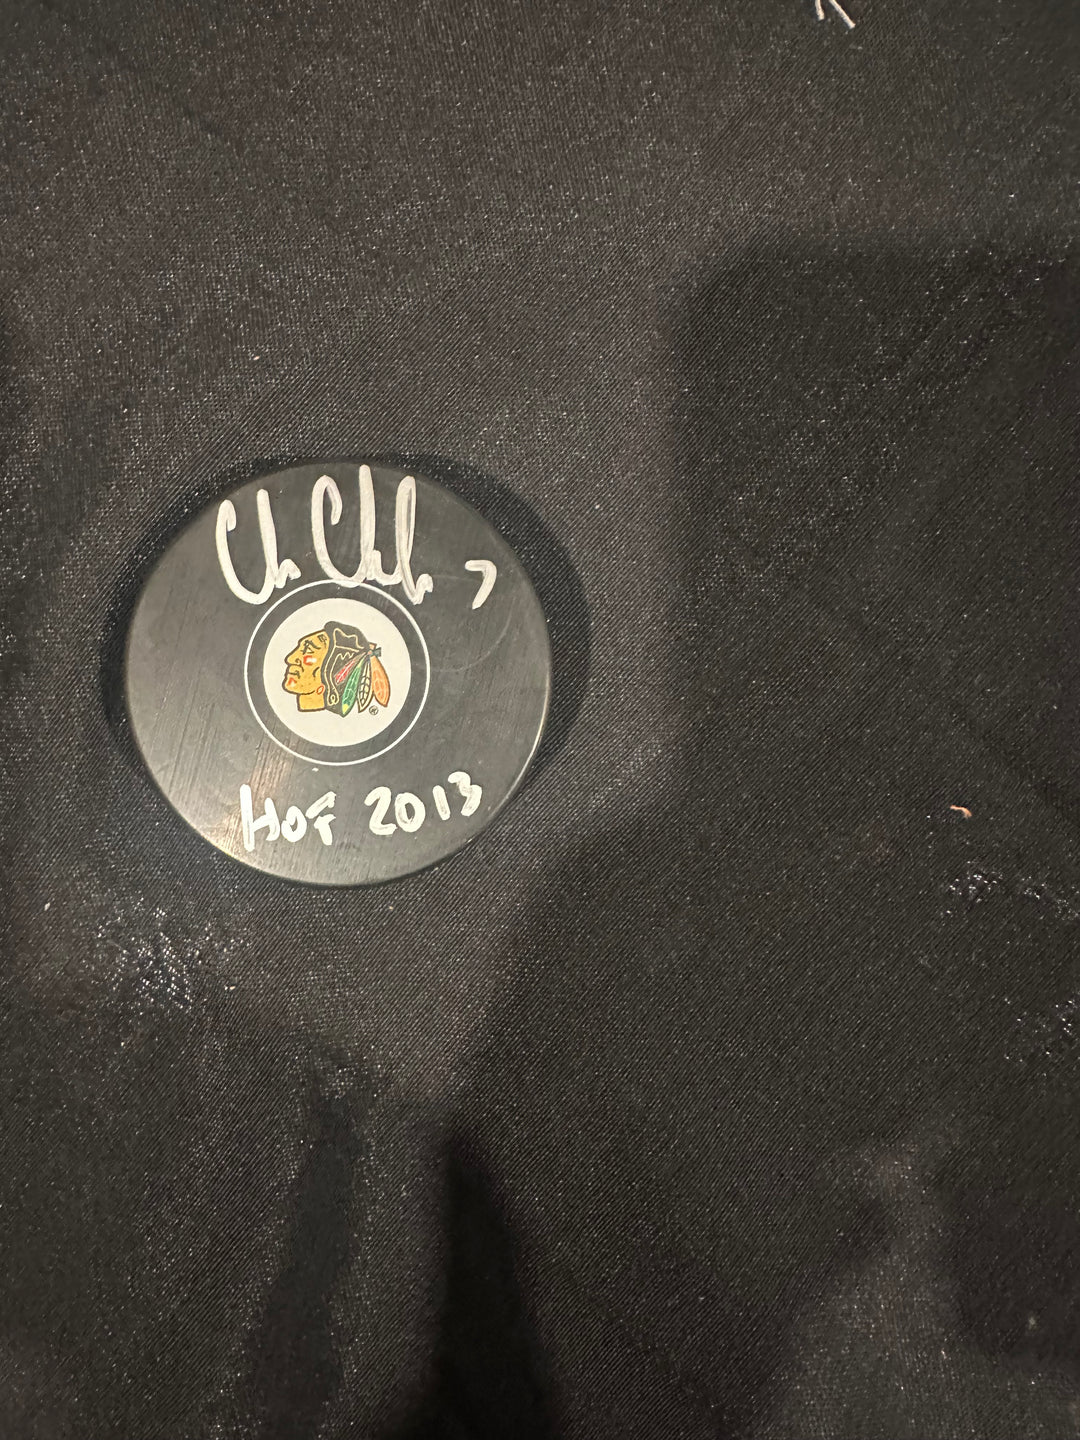 Chris Chelios signed  Blackhawks logo puck, with "HOF 2013" ins